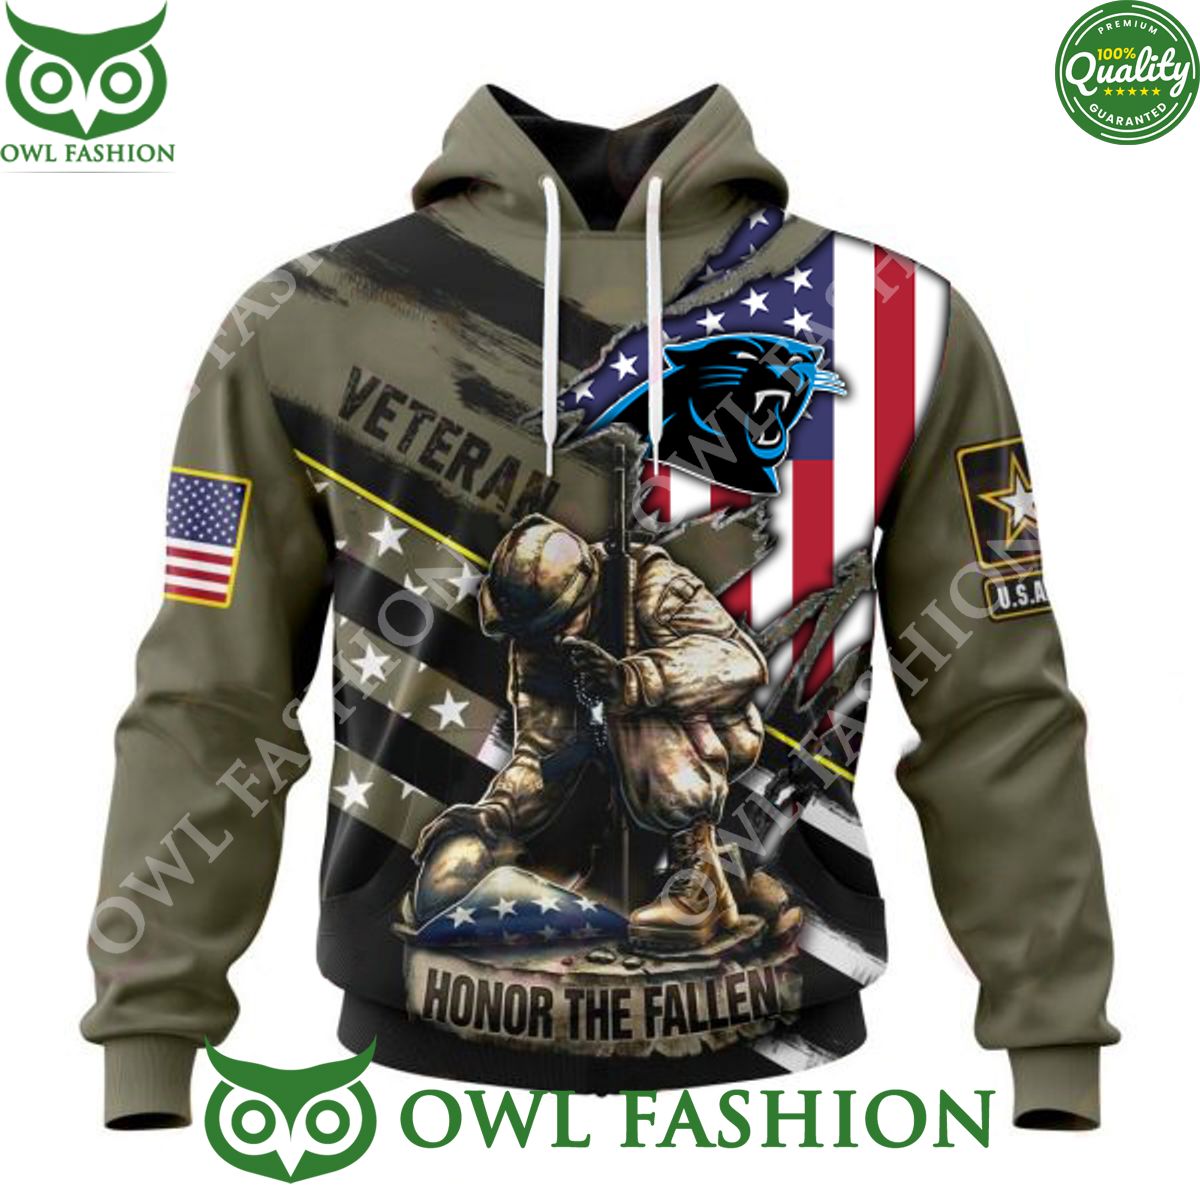 nfl carolina panthers honor veterans and their families 3d hoodie t shirt sweatshirt 1 EUQIN.jpg